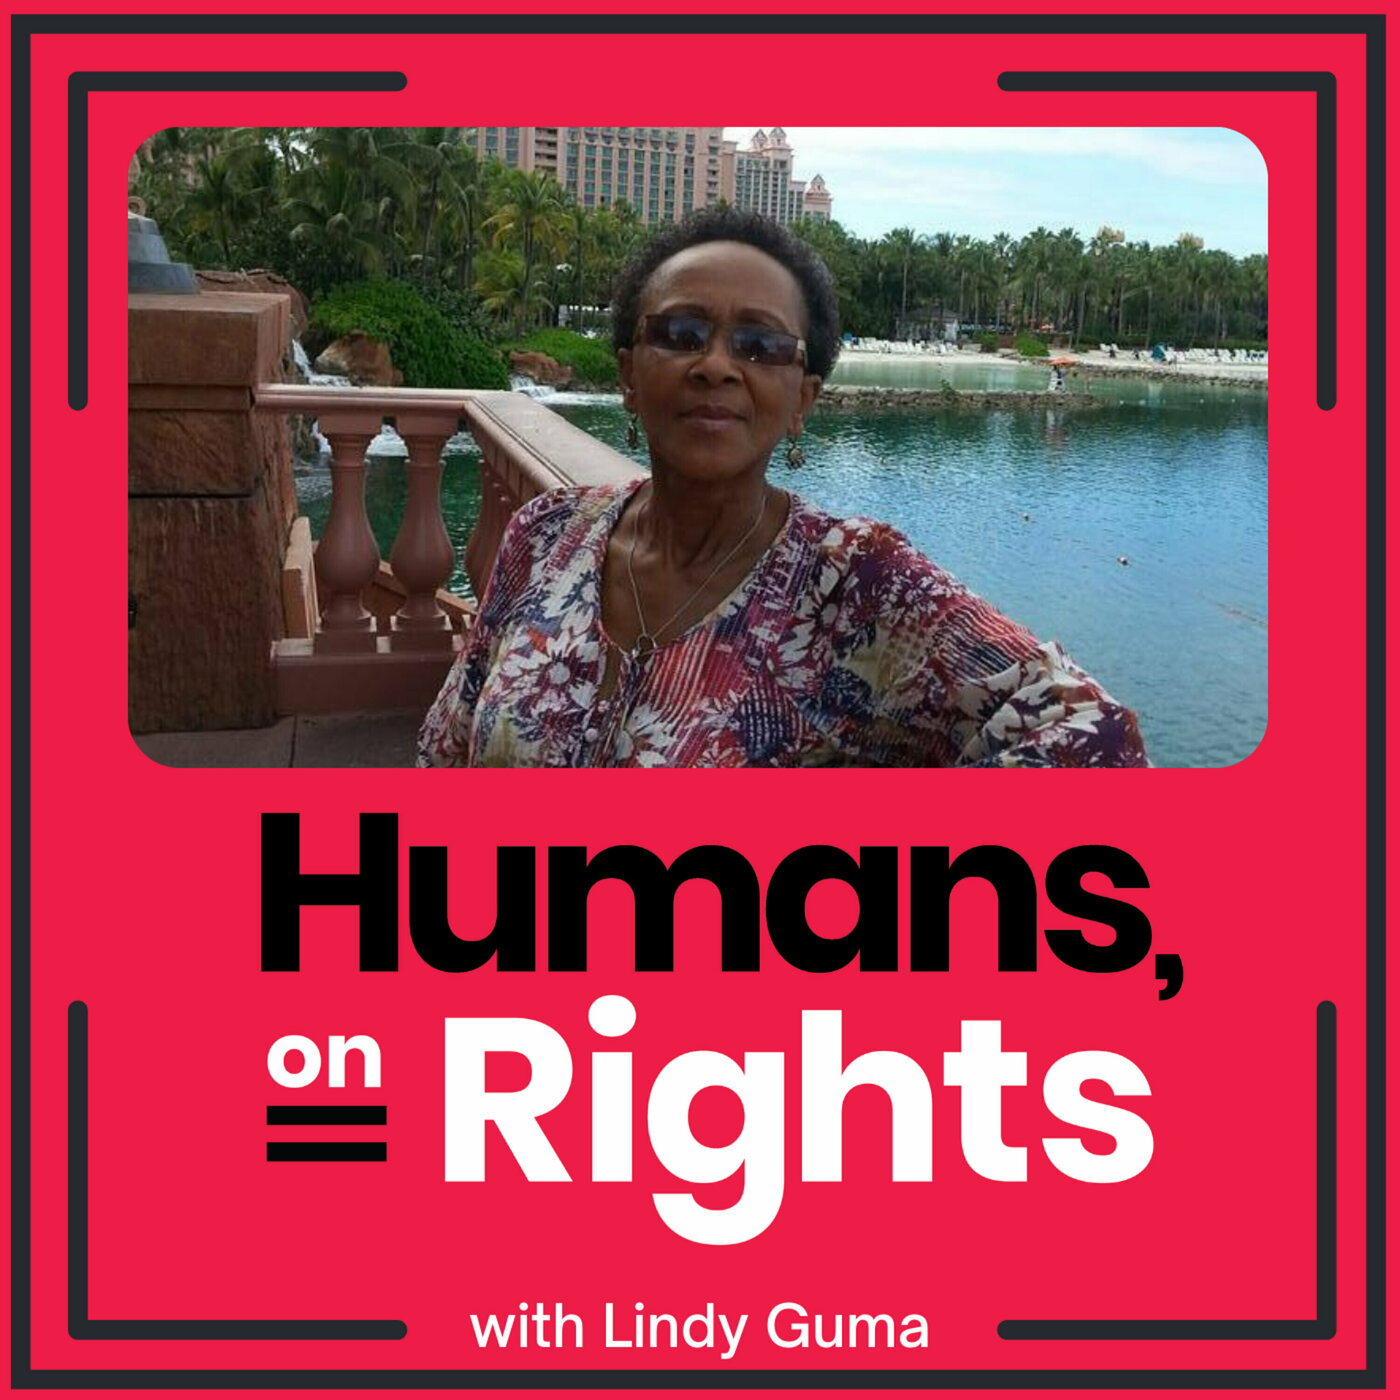 A Conversation on Community Activism with Lindy Guma